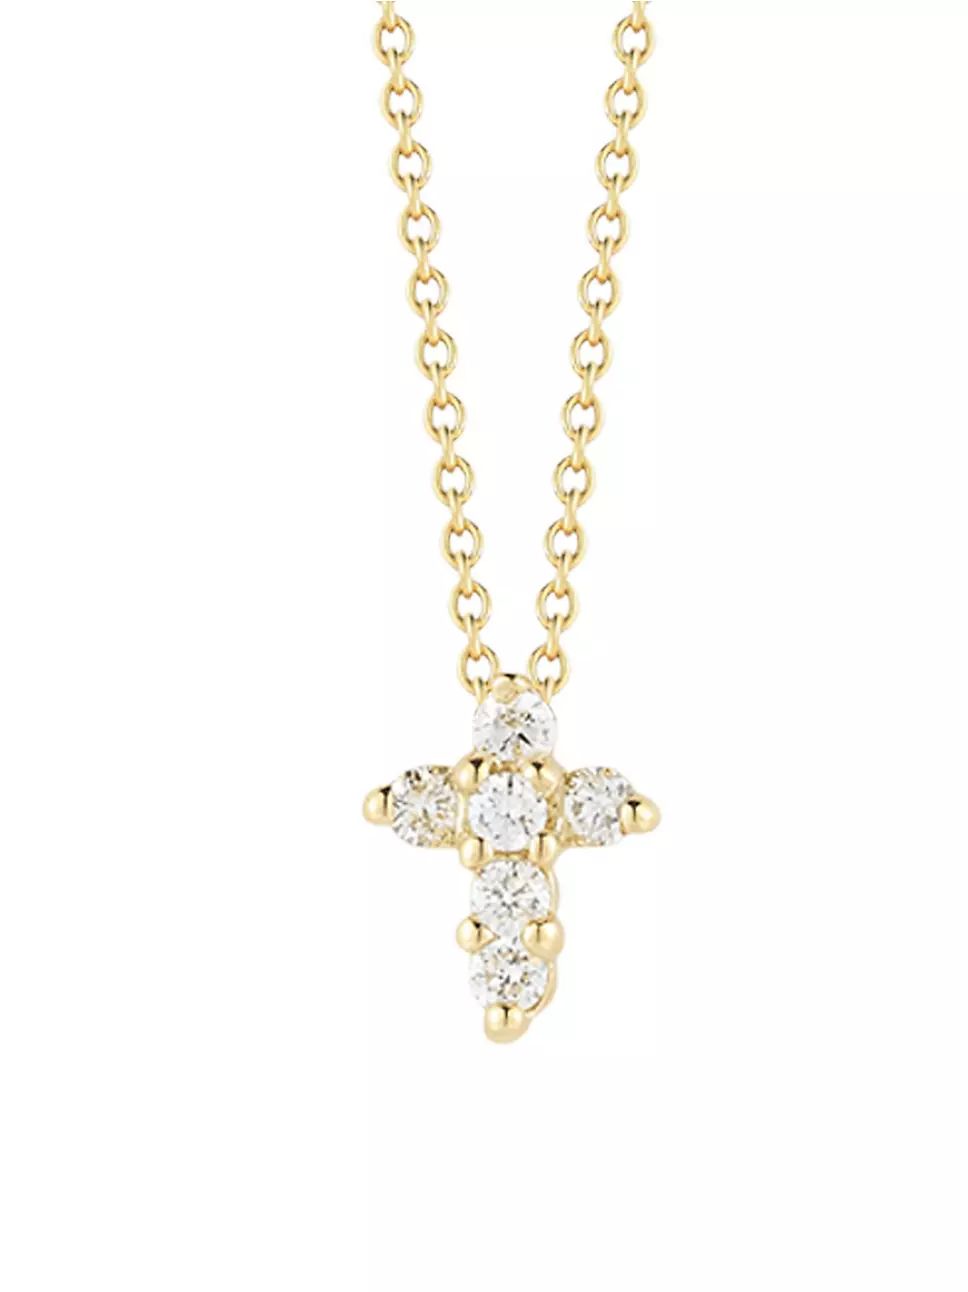 Tiny Treasures 0.11 TCW Diamond & 18K Yellow Gold Baby Cross Pendant Necklace | Saks Fifth Avenue